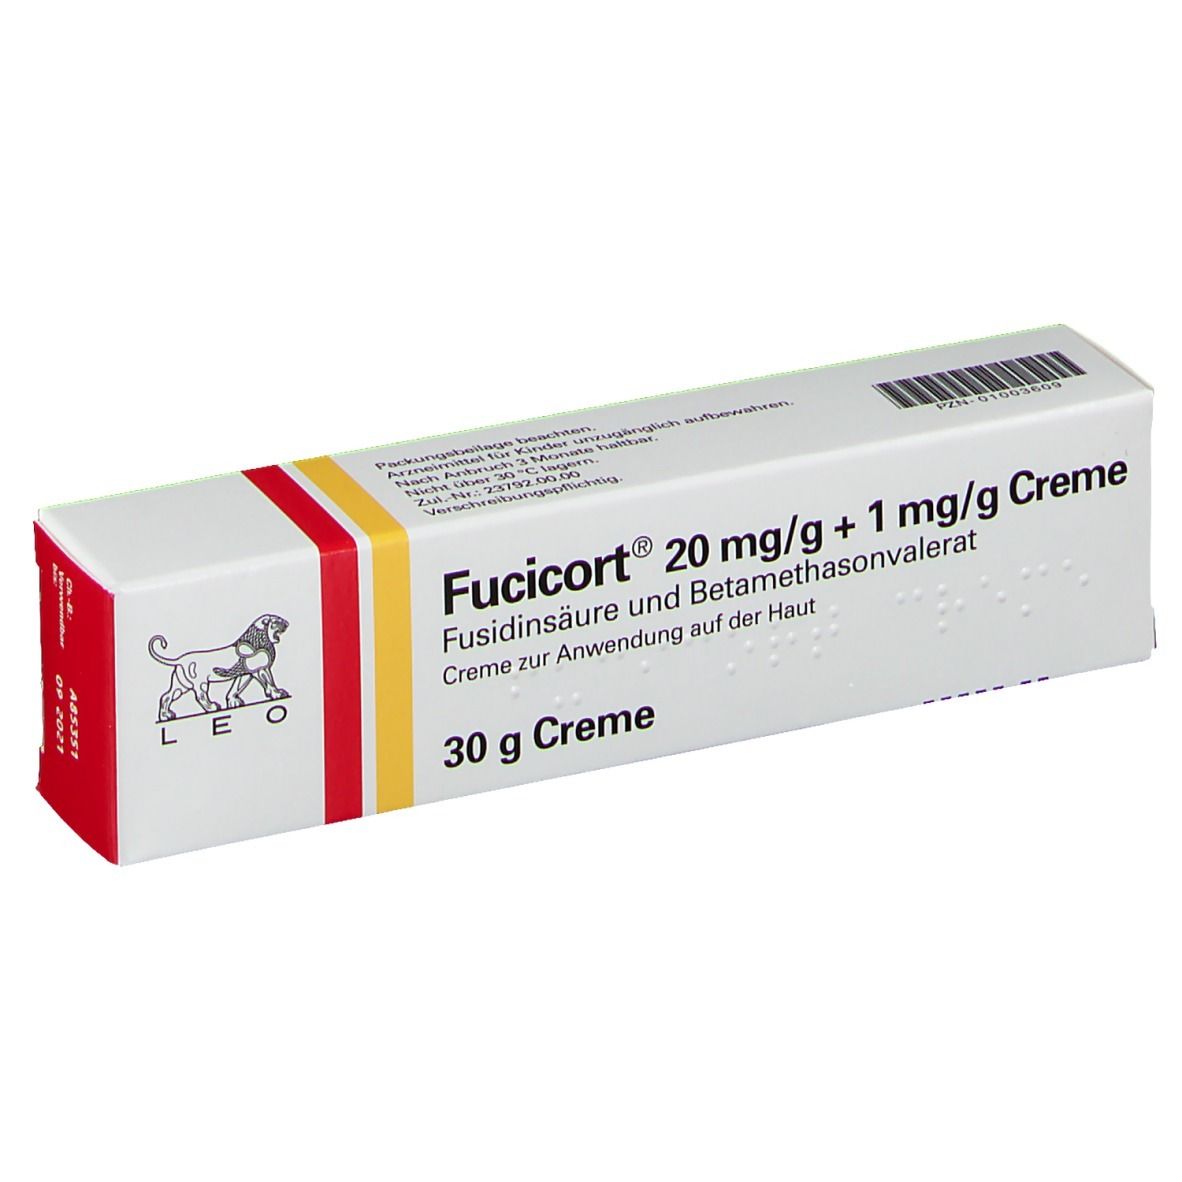 Fucicort® 20 mg/g + 1 Creme 30 - shop-apotheke.com